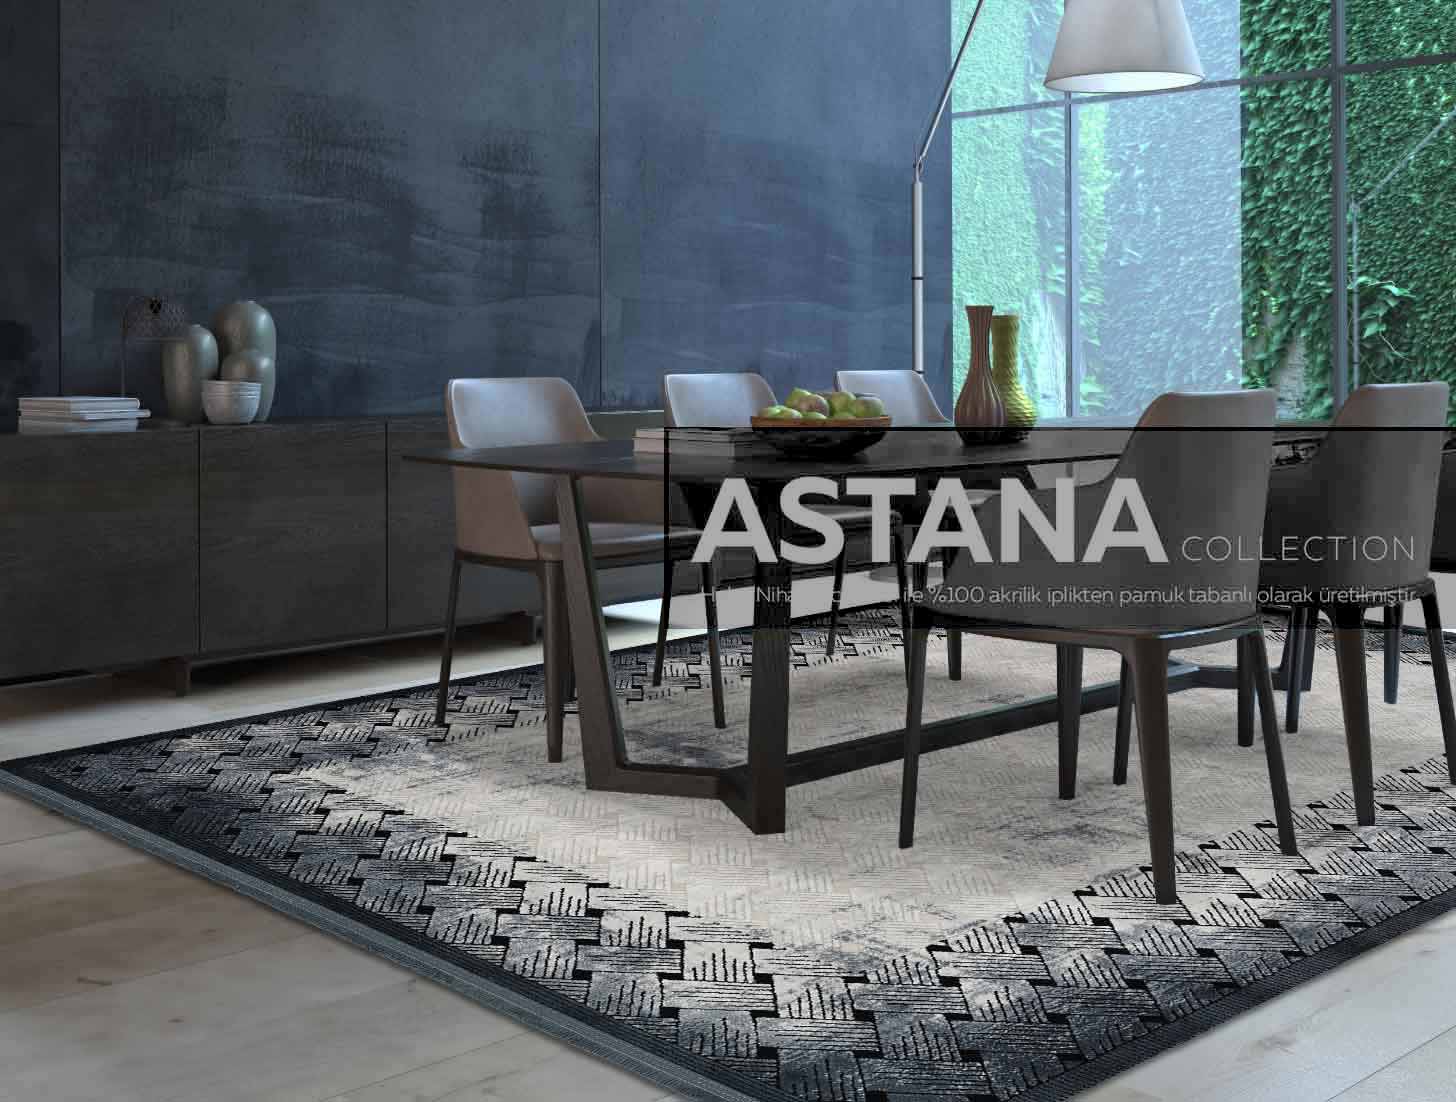 Astana Collection